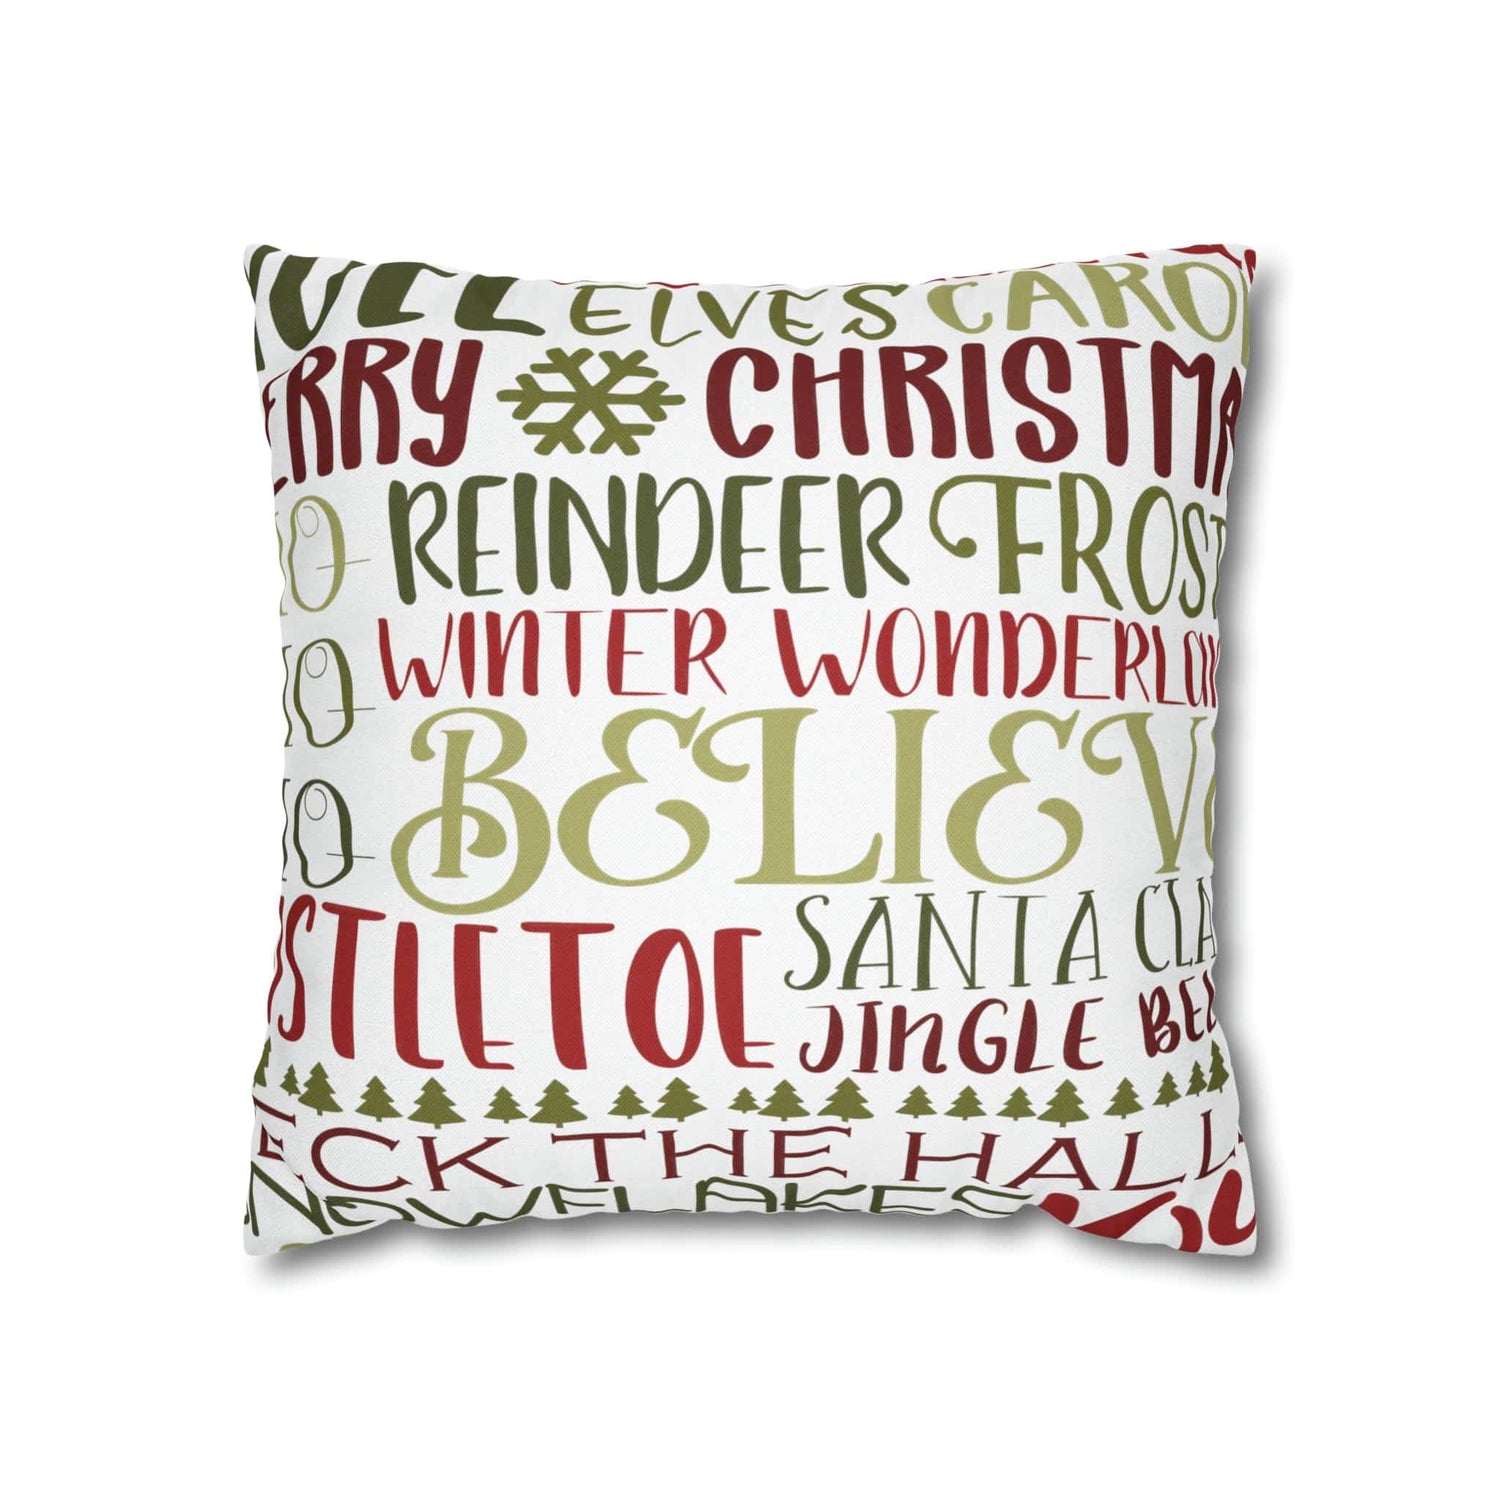 Kate McEnroe New York Holiday Throw Pillow Cover, Farmhouse Decor, Reindeer, Mistletoe, Believe, Winter Wonderland, Jingle Bells, Word Art Christmas PillowcaseThrow Pillow Covers66441887106795551151